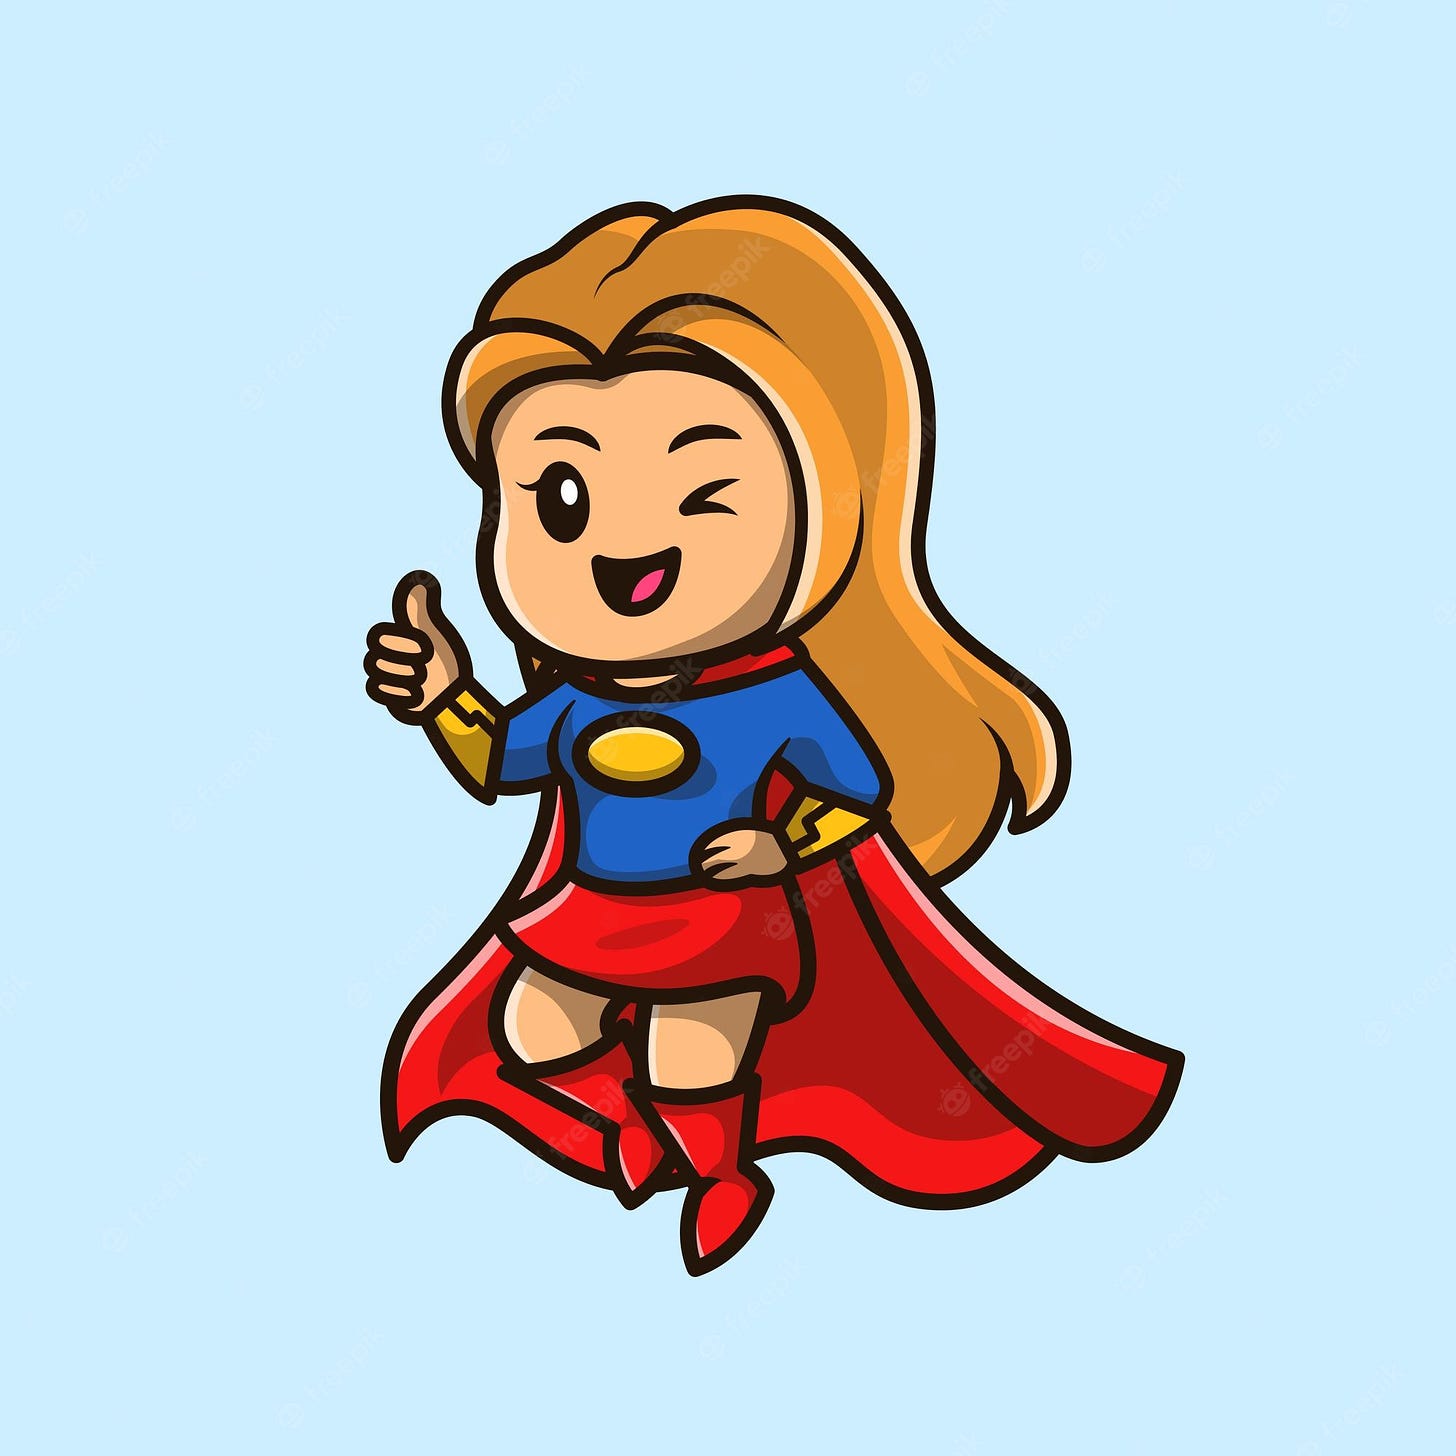 Free Vector | Cute super hero girl cartoon icon illustration.